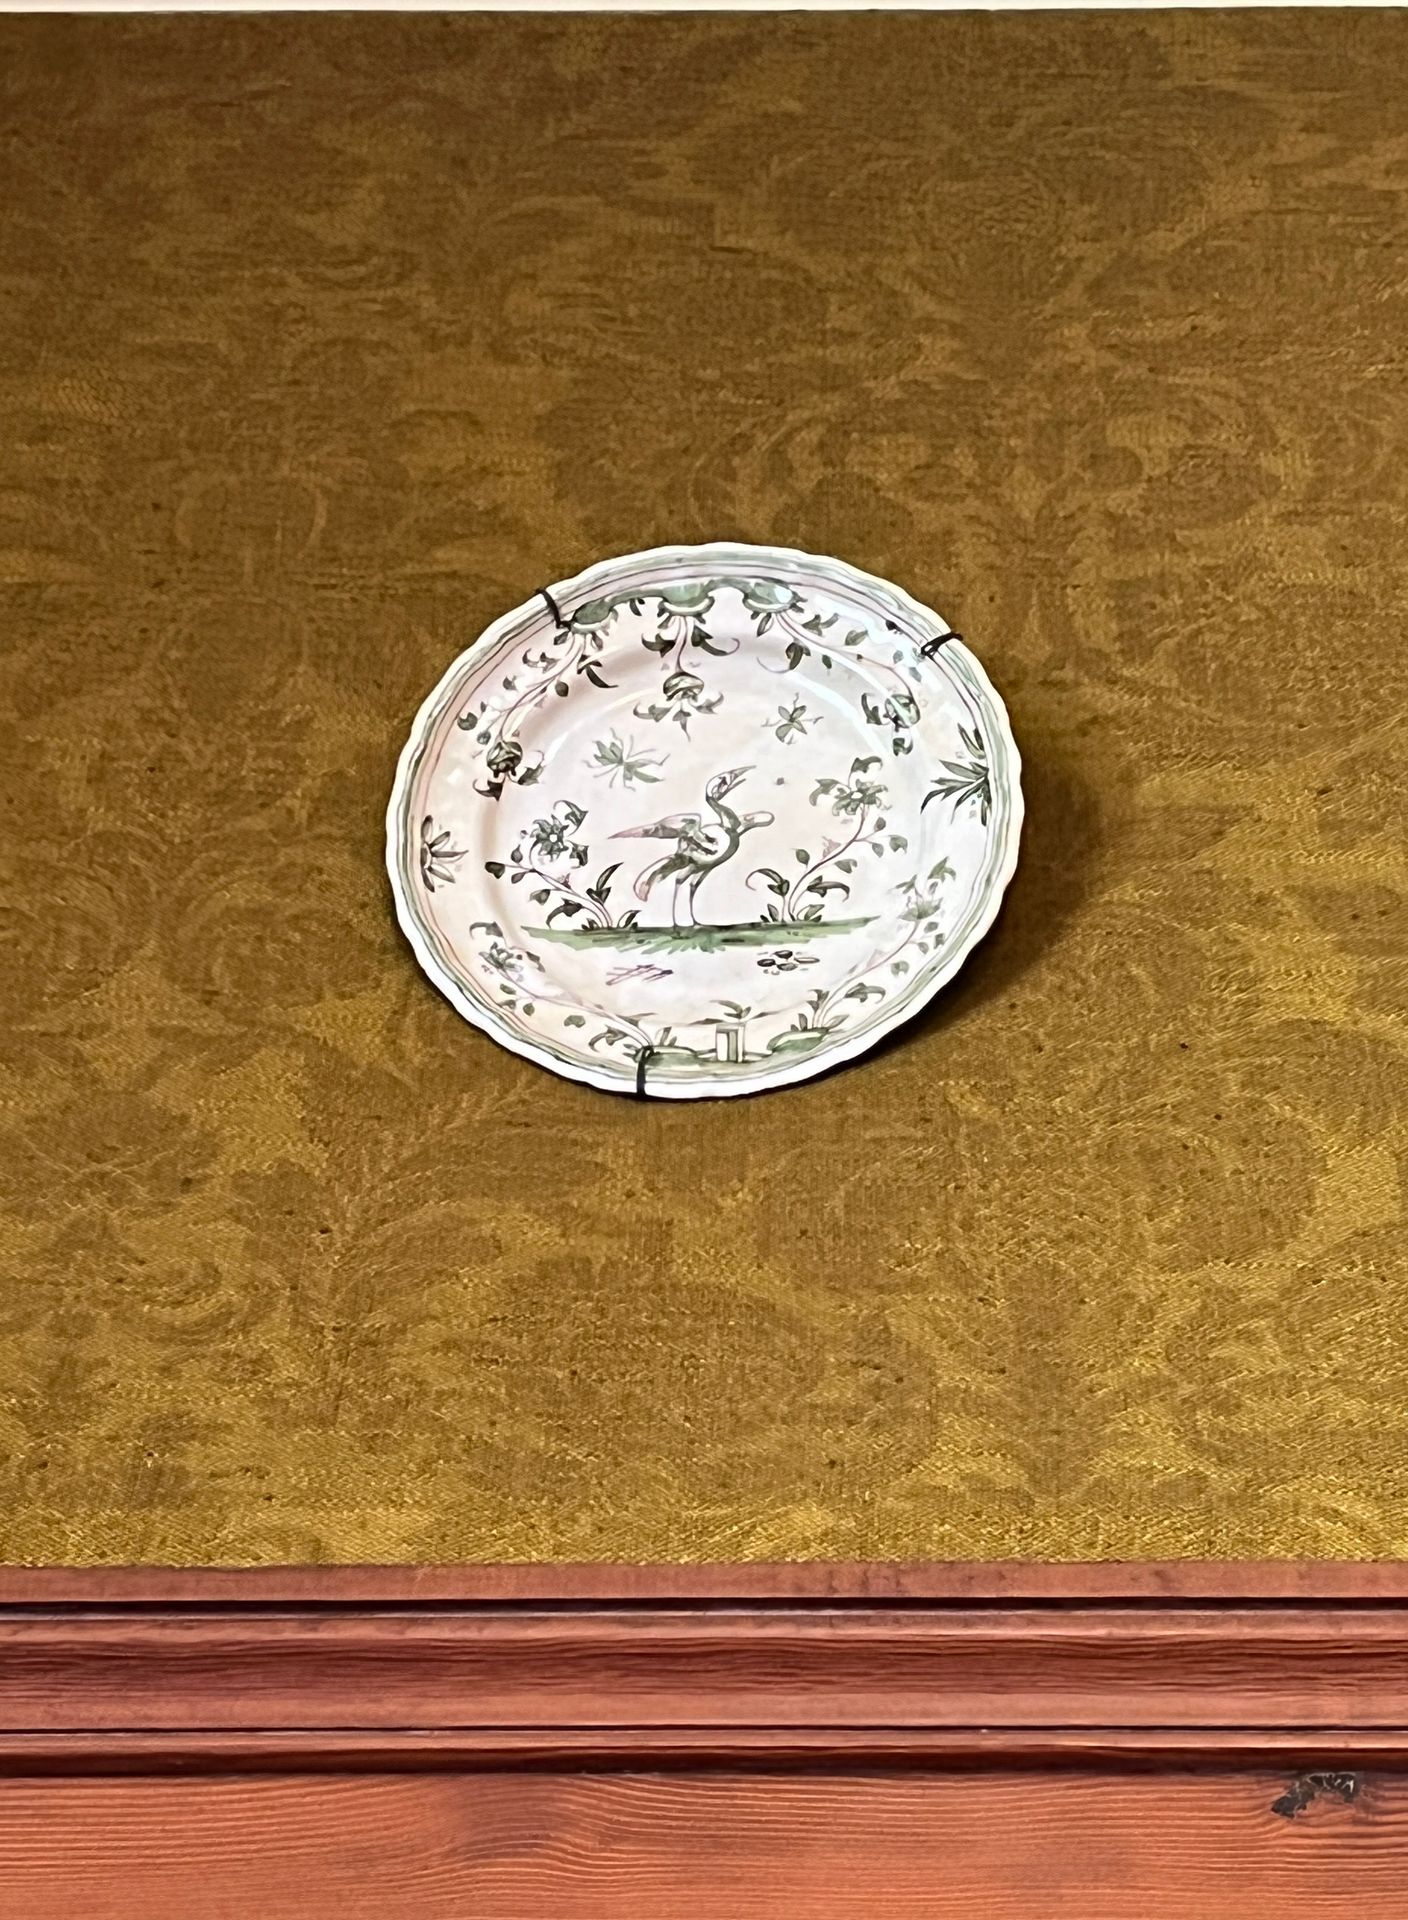 Null 91.Moustiers

一对陶器盘子，上面装饰着中国风格的狮鹫和一个字。

18世纪末